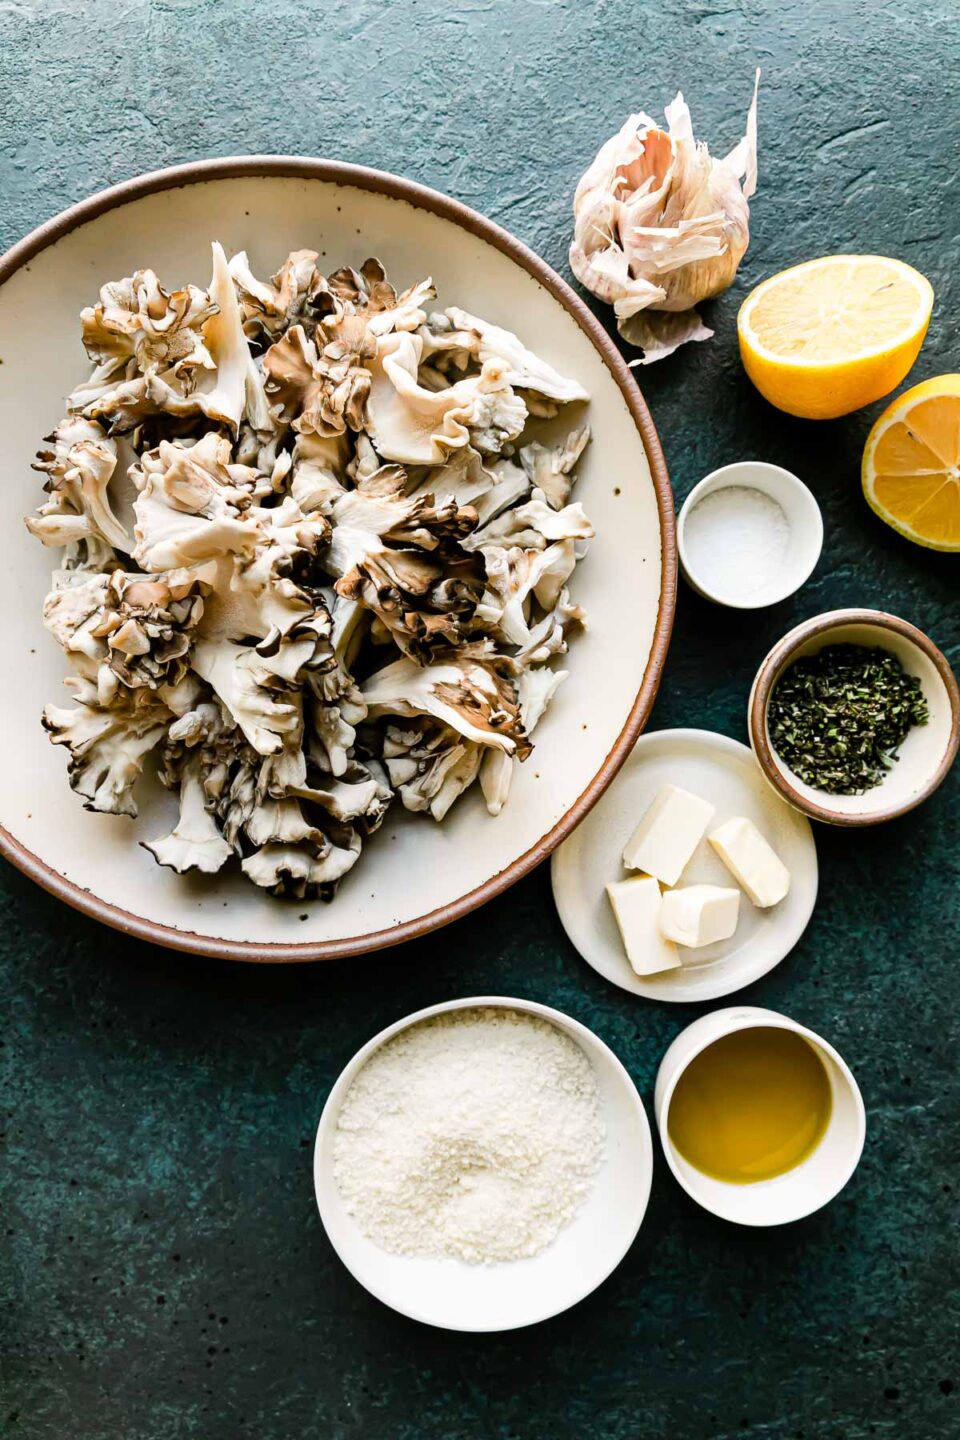 Roasted mushrooms ingredients arranged on a black textured surface: maitake mushrooms, olive oil, kosher salt, unsalted butter, fresh herbs, garlic, lemon, and grated parmesan.